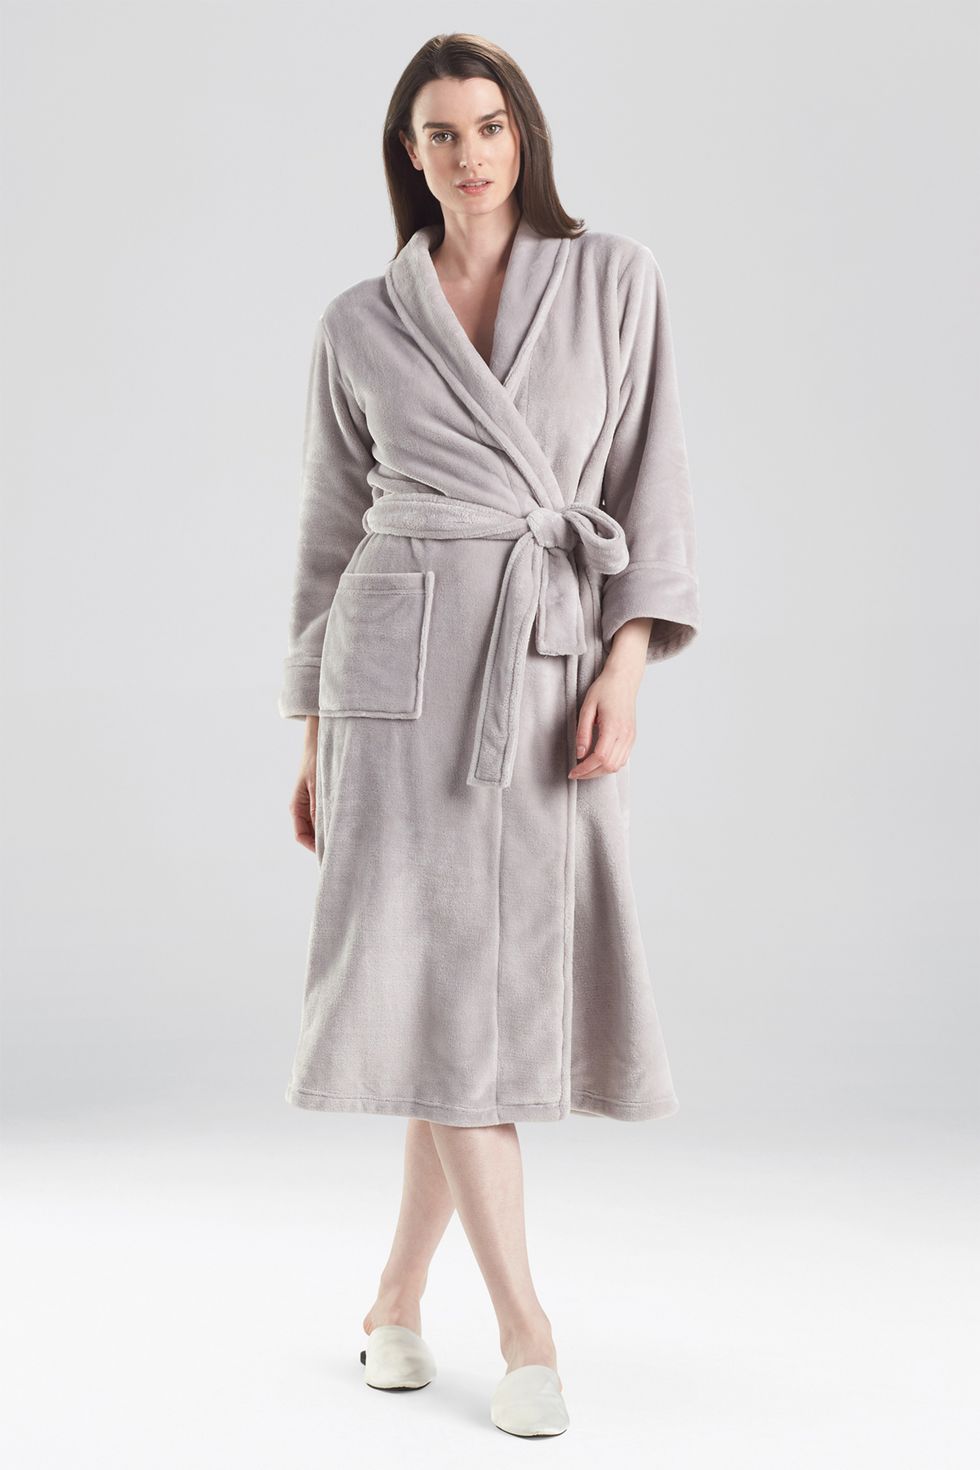 Fuzzy Robe for Women Short Bathrobe Tie Waist Solid Cute Plush